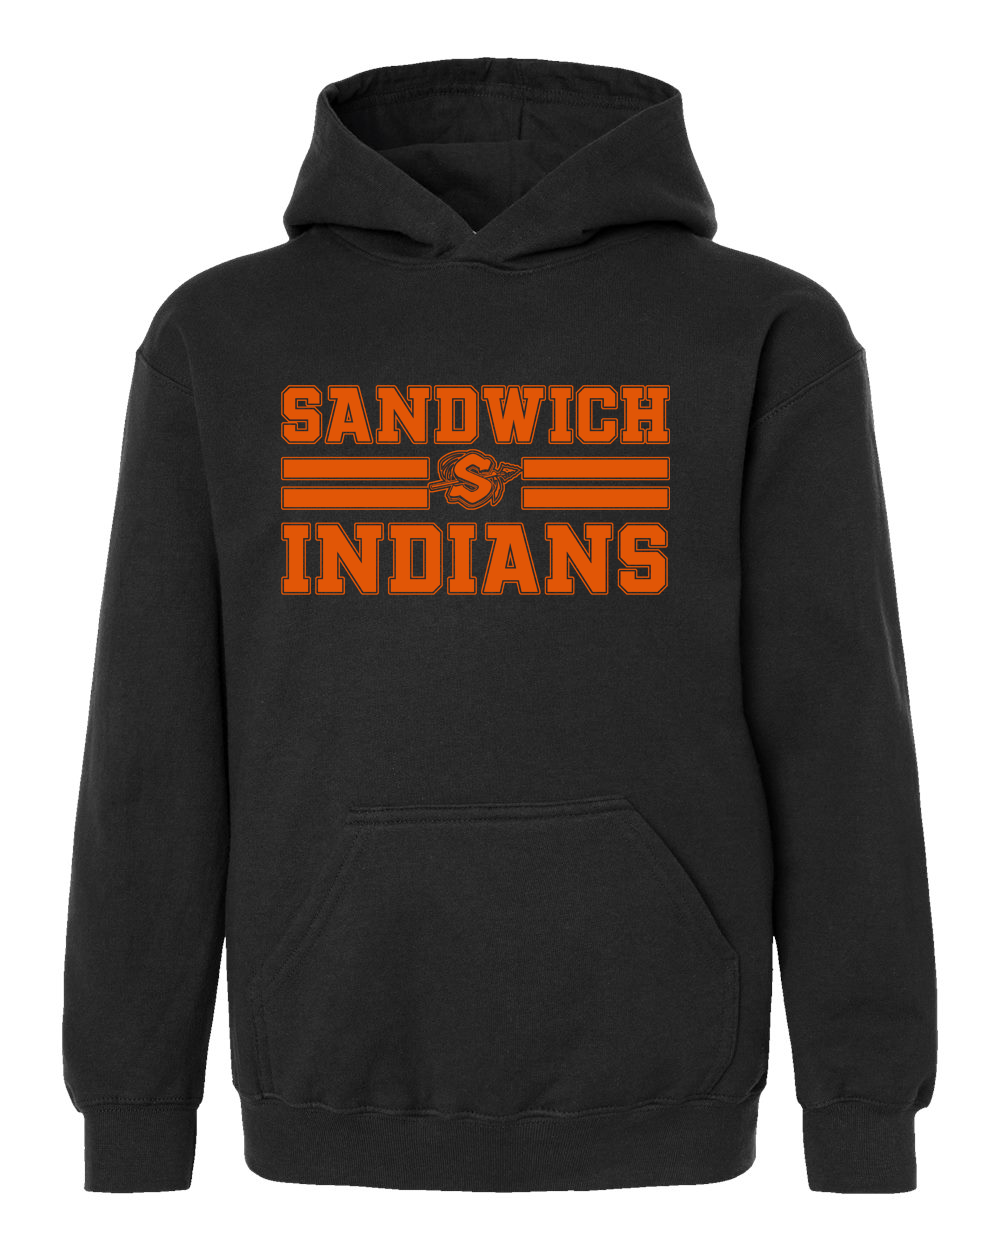 Sandwich Indians Basic Hooded Sweatshirt